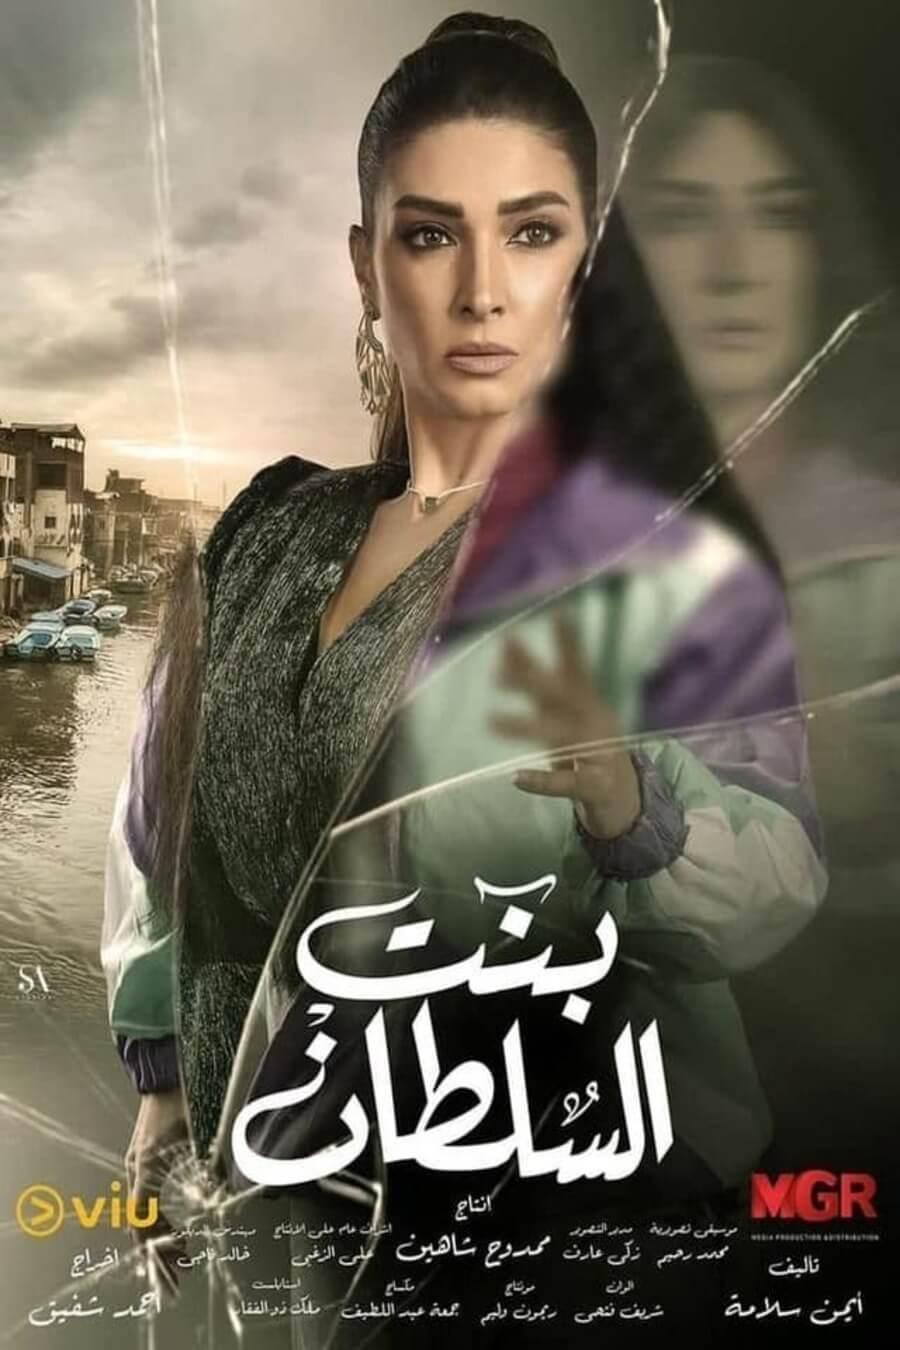 TV ratings for Bint El Sultan (بنت السلطان) in Italy. viu TV series